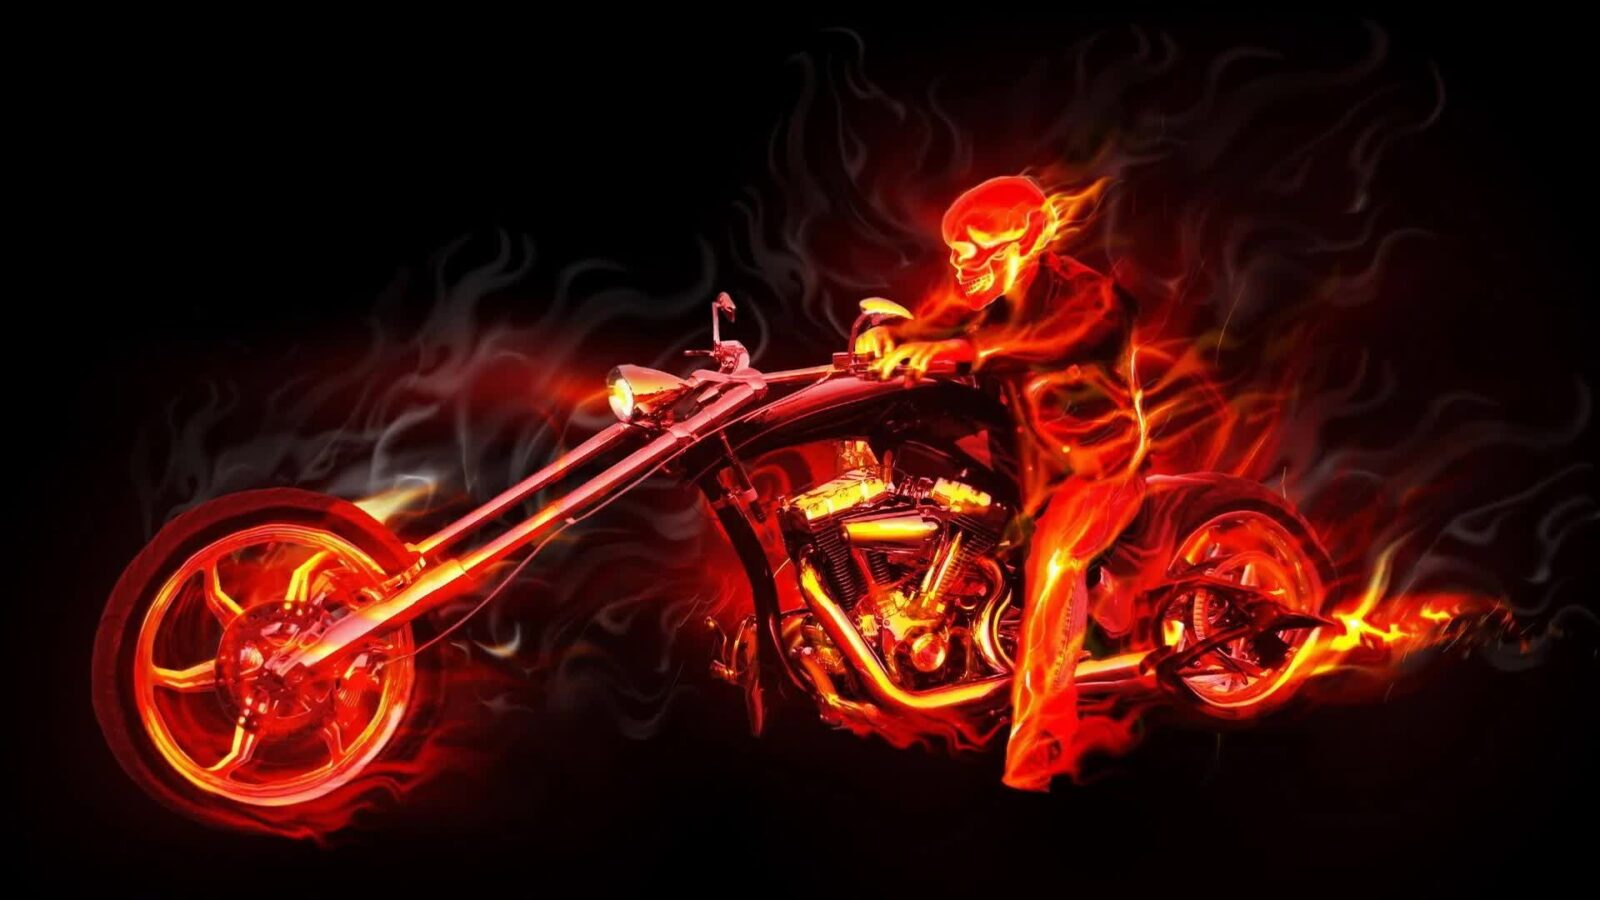 Dark Rider Or Ghost Rider Artwork - Free Live Wallpaper - Live Desktop